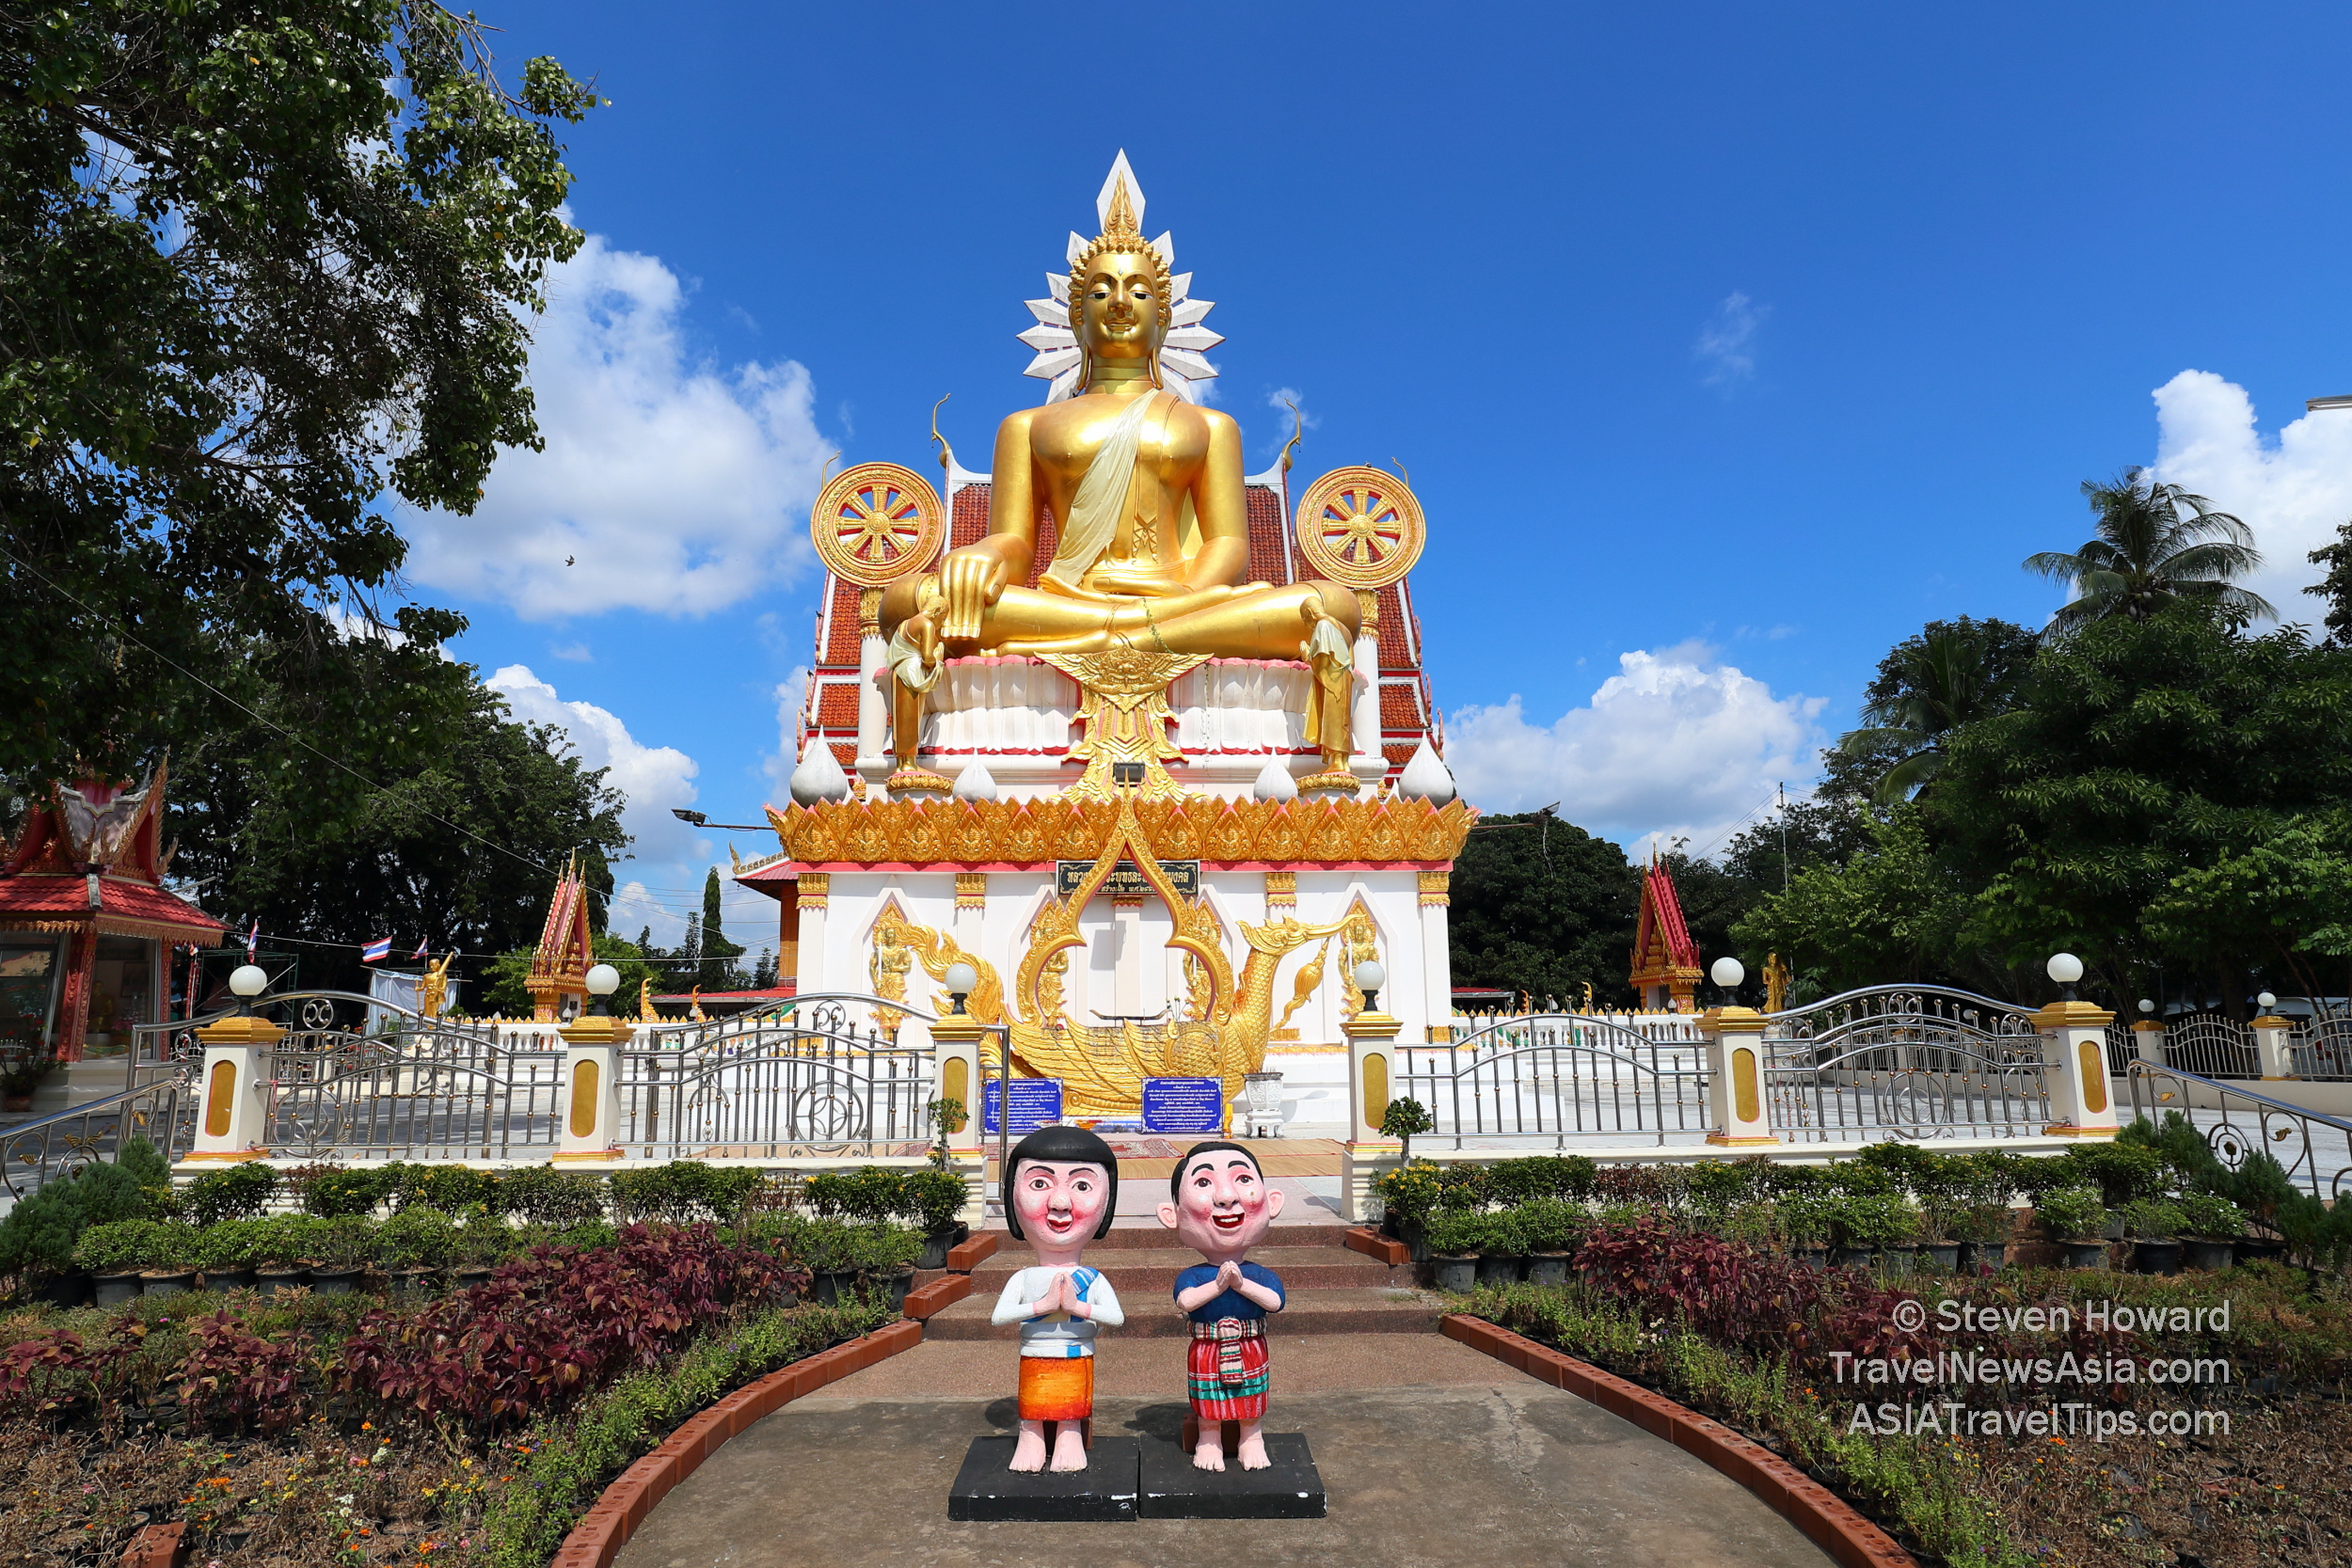 Pictures from Sisaket (ศรีสะเกษ), Thailand